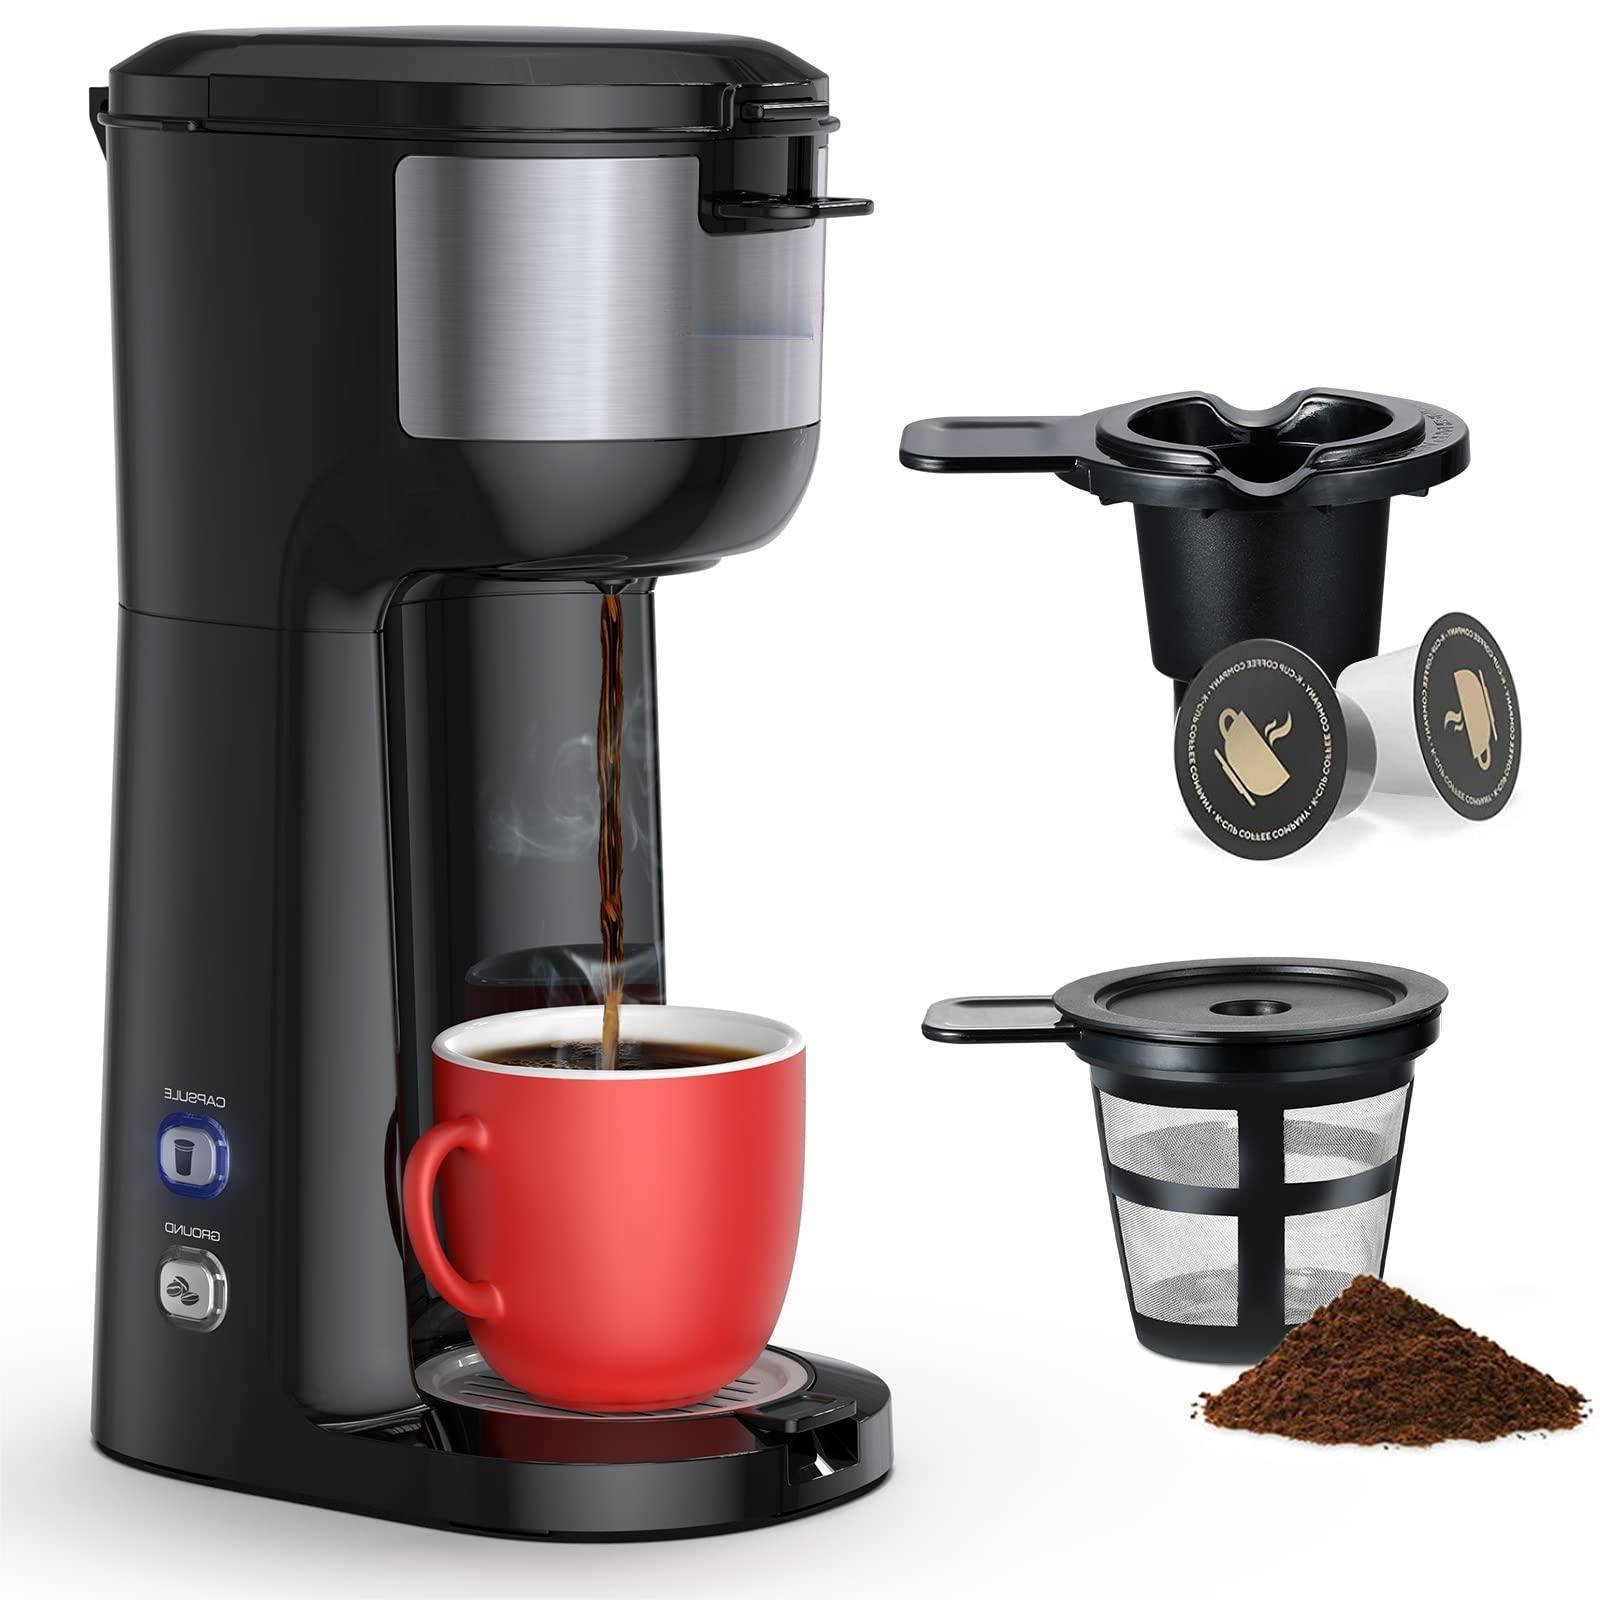  Single Serve Coffee Maker K Cup & Ground Coffee, One